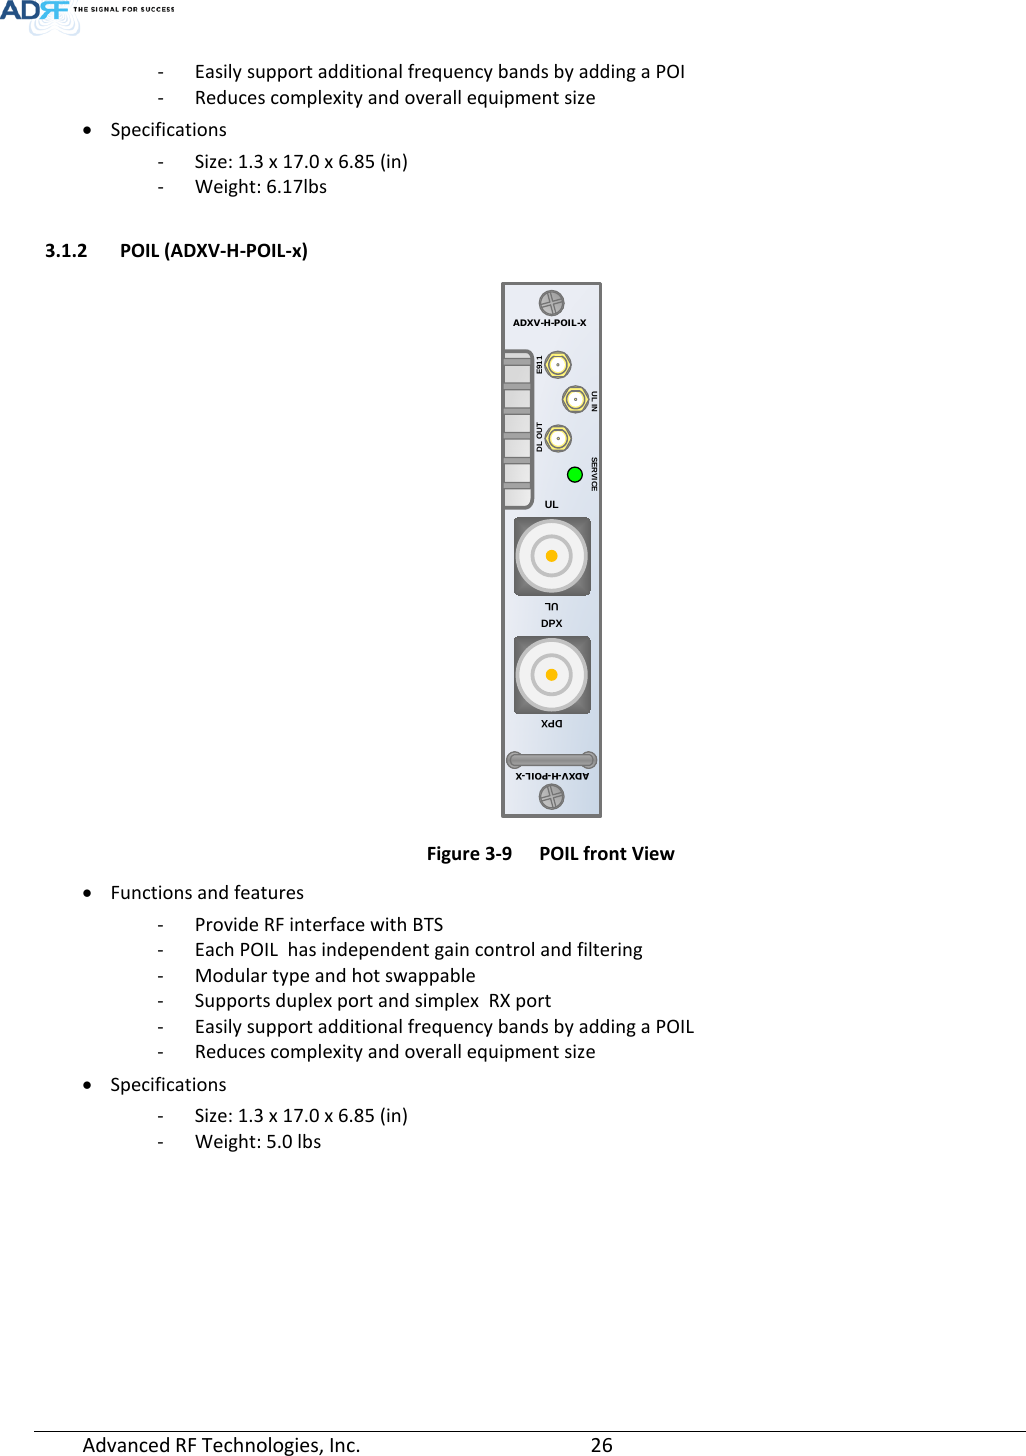 Page 26 of ADRF KOREA ADXV-R-336 DAS (Distributed Antenna System) User Manual ADXV DAS